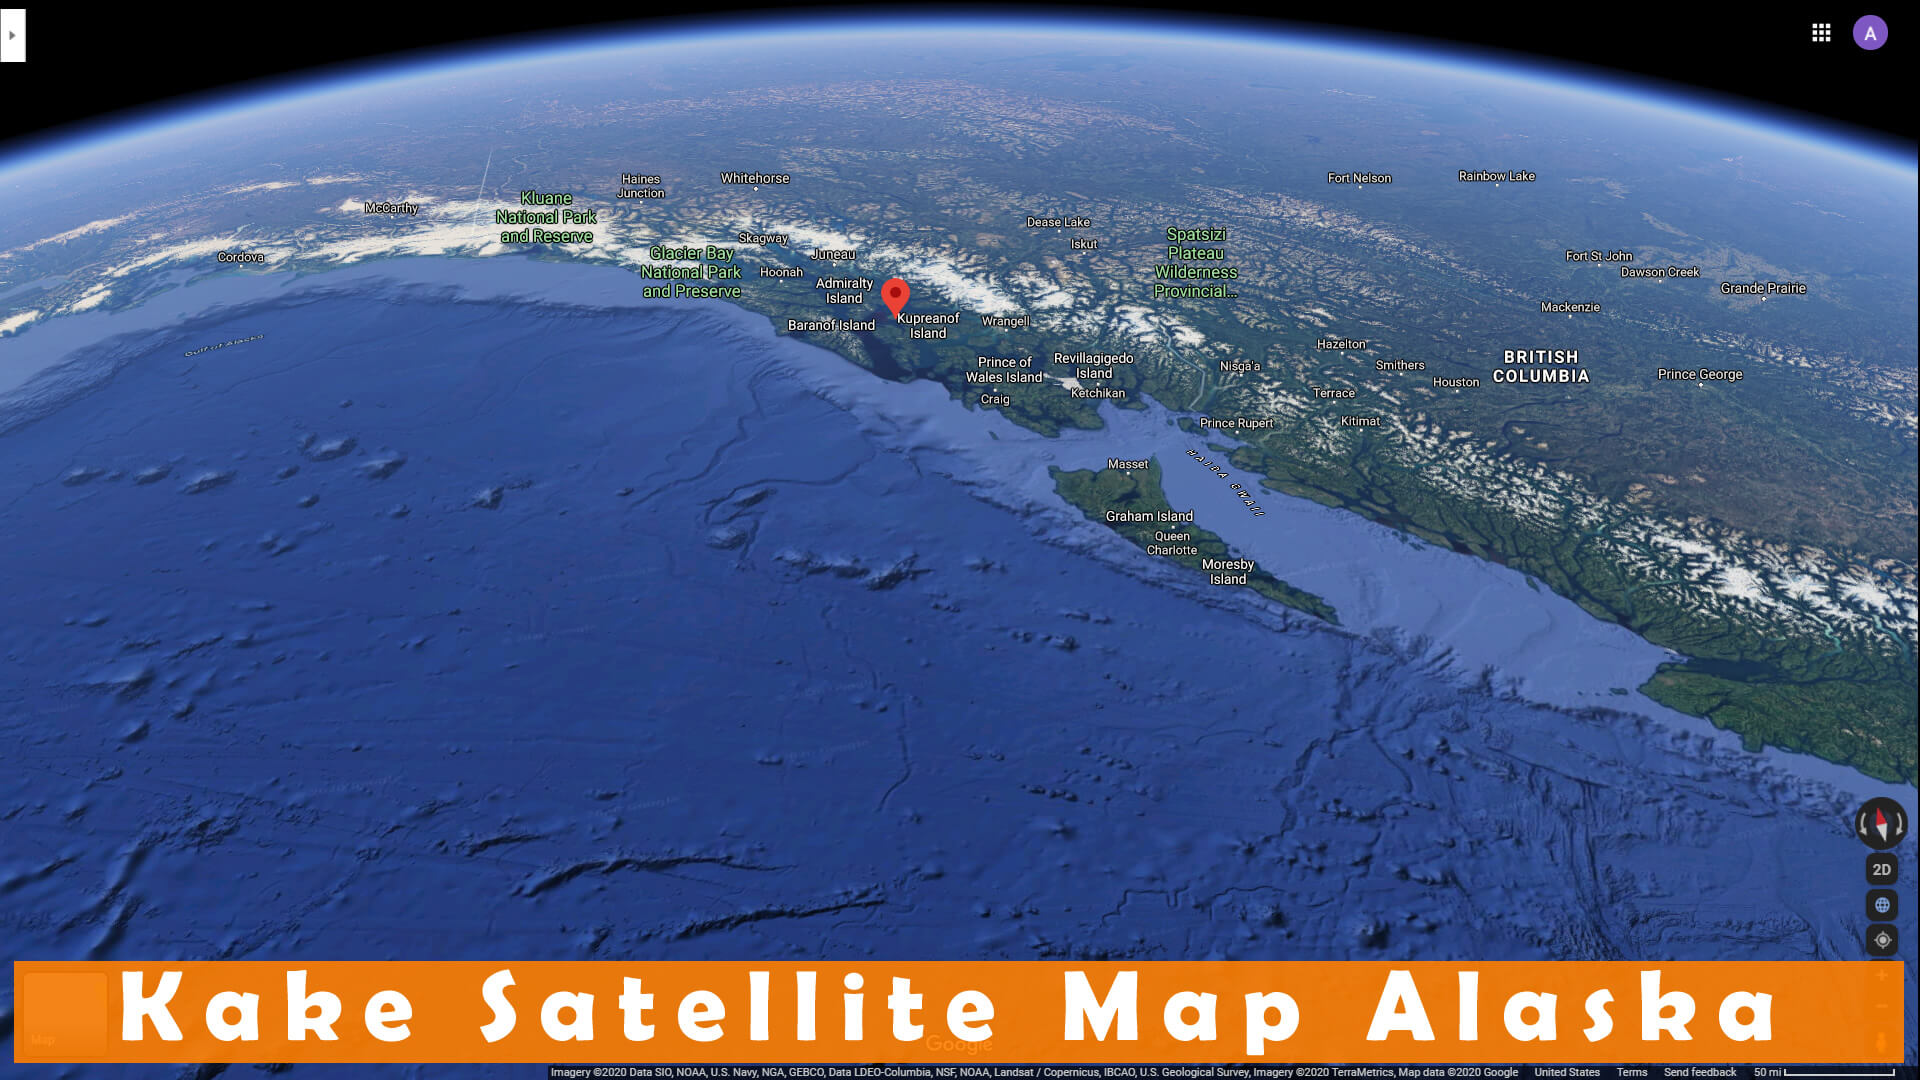 Kake Satellite Carte Alaska